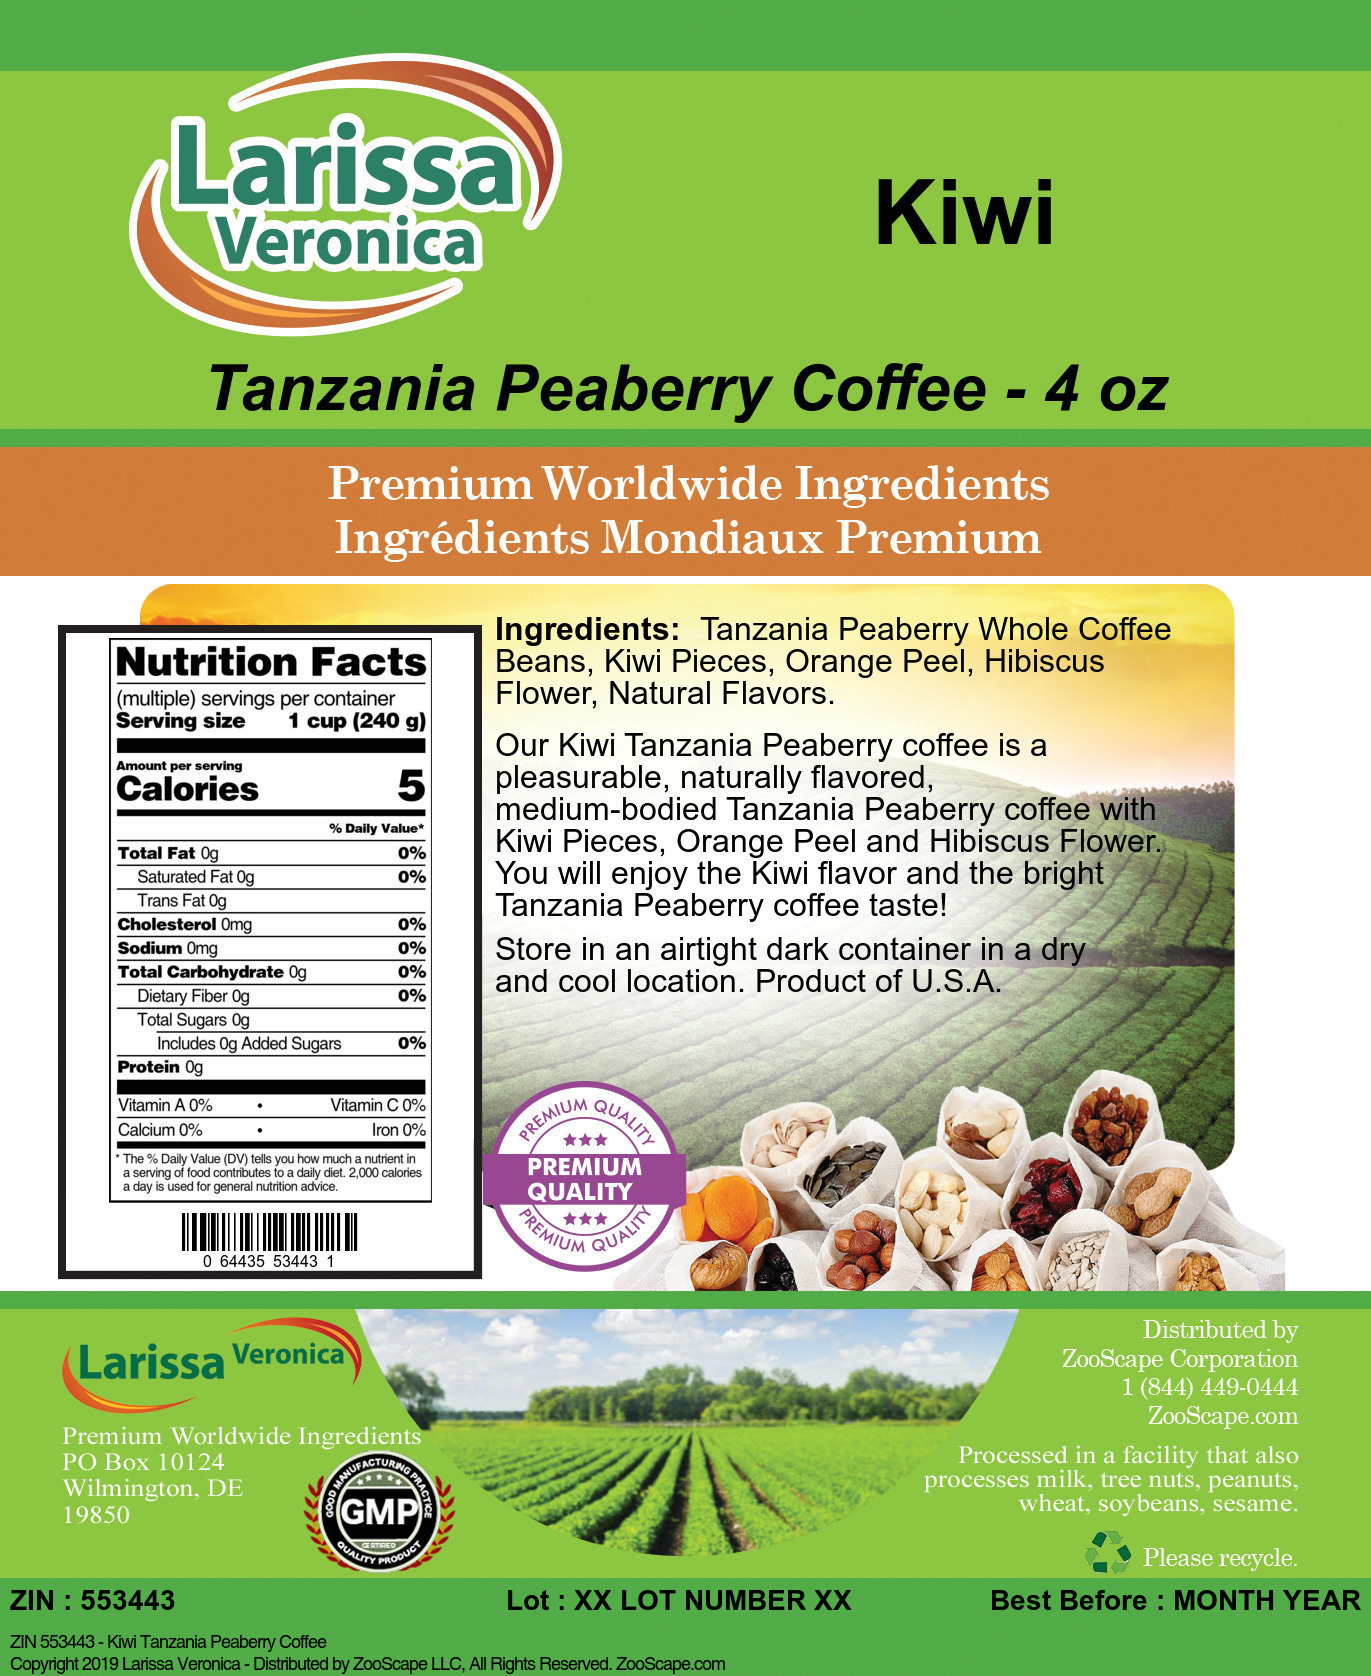 Kiwi Tanzania Peaberry Coffee - Label